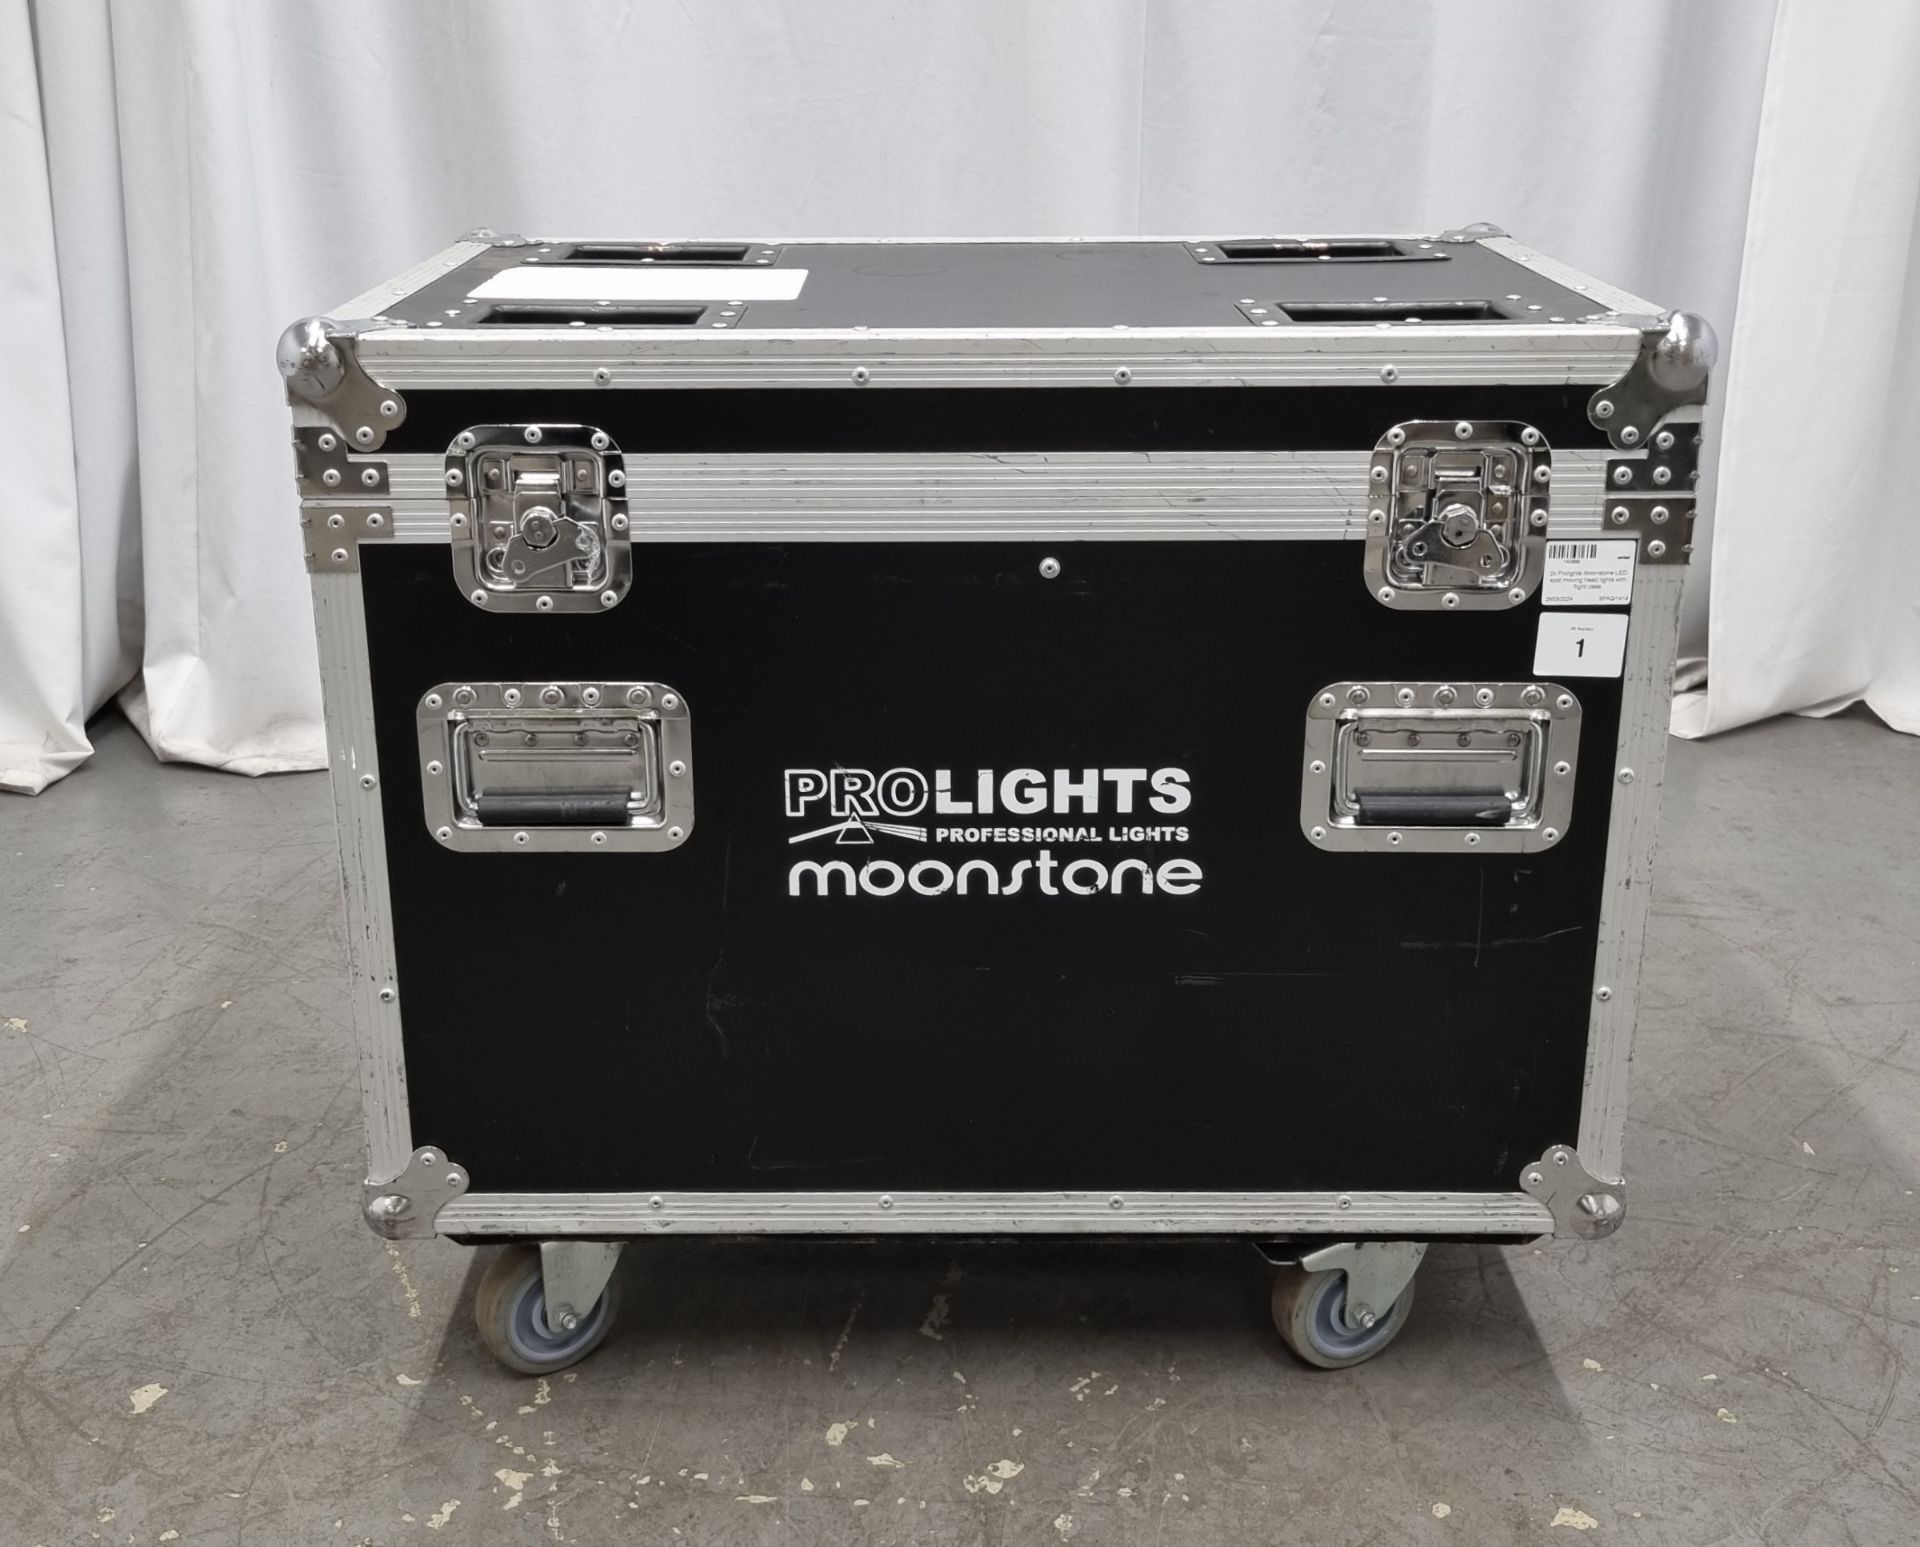 2x Prolights Moonstone LED spot moving head lights with flight case - Image 12 of 12